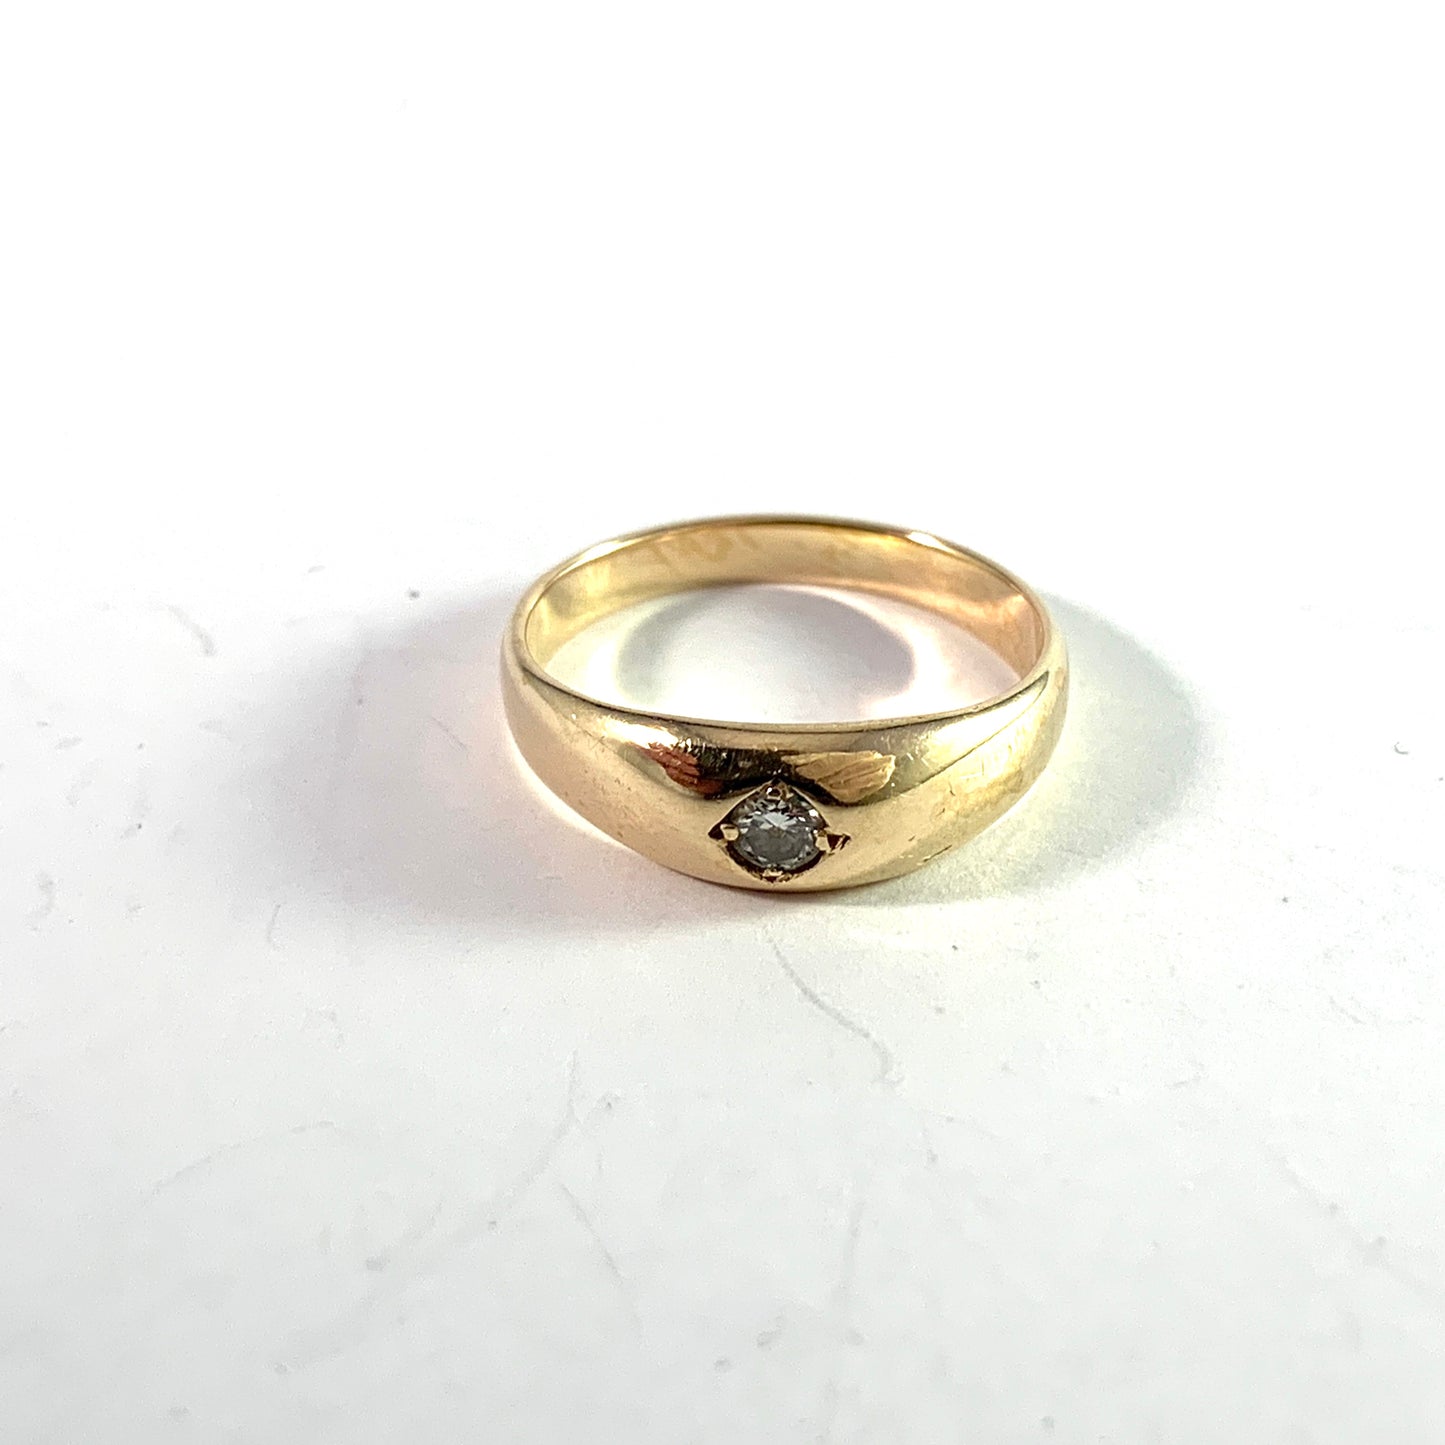 Midtjydsk Guldsmedie, Denmark 1960s. Vintage 14k Gold Diamond Ring.